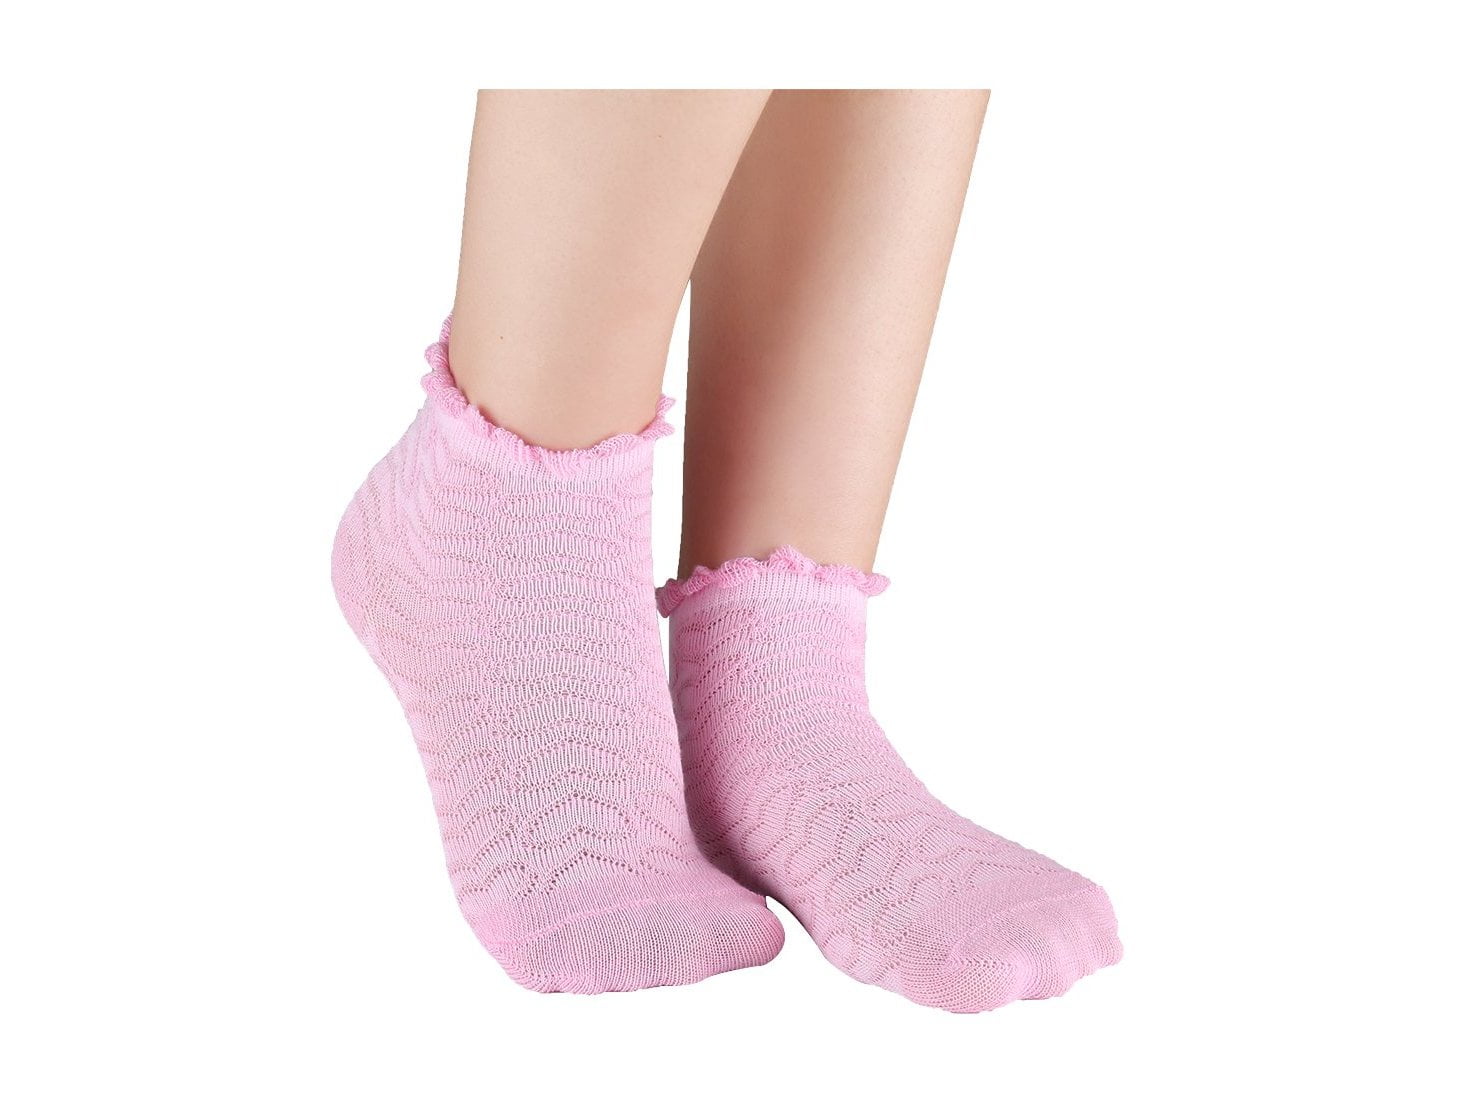 Womens Espinete-Pink-Hedgehog-Erizo-Muppet-Furry-Toys Long Tube Socks Novelty Lightweight High Ankle Socks for Women